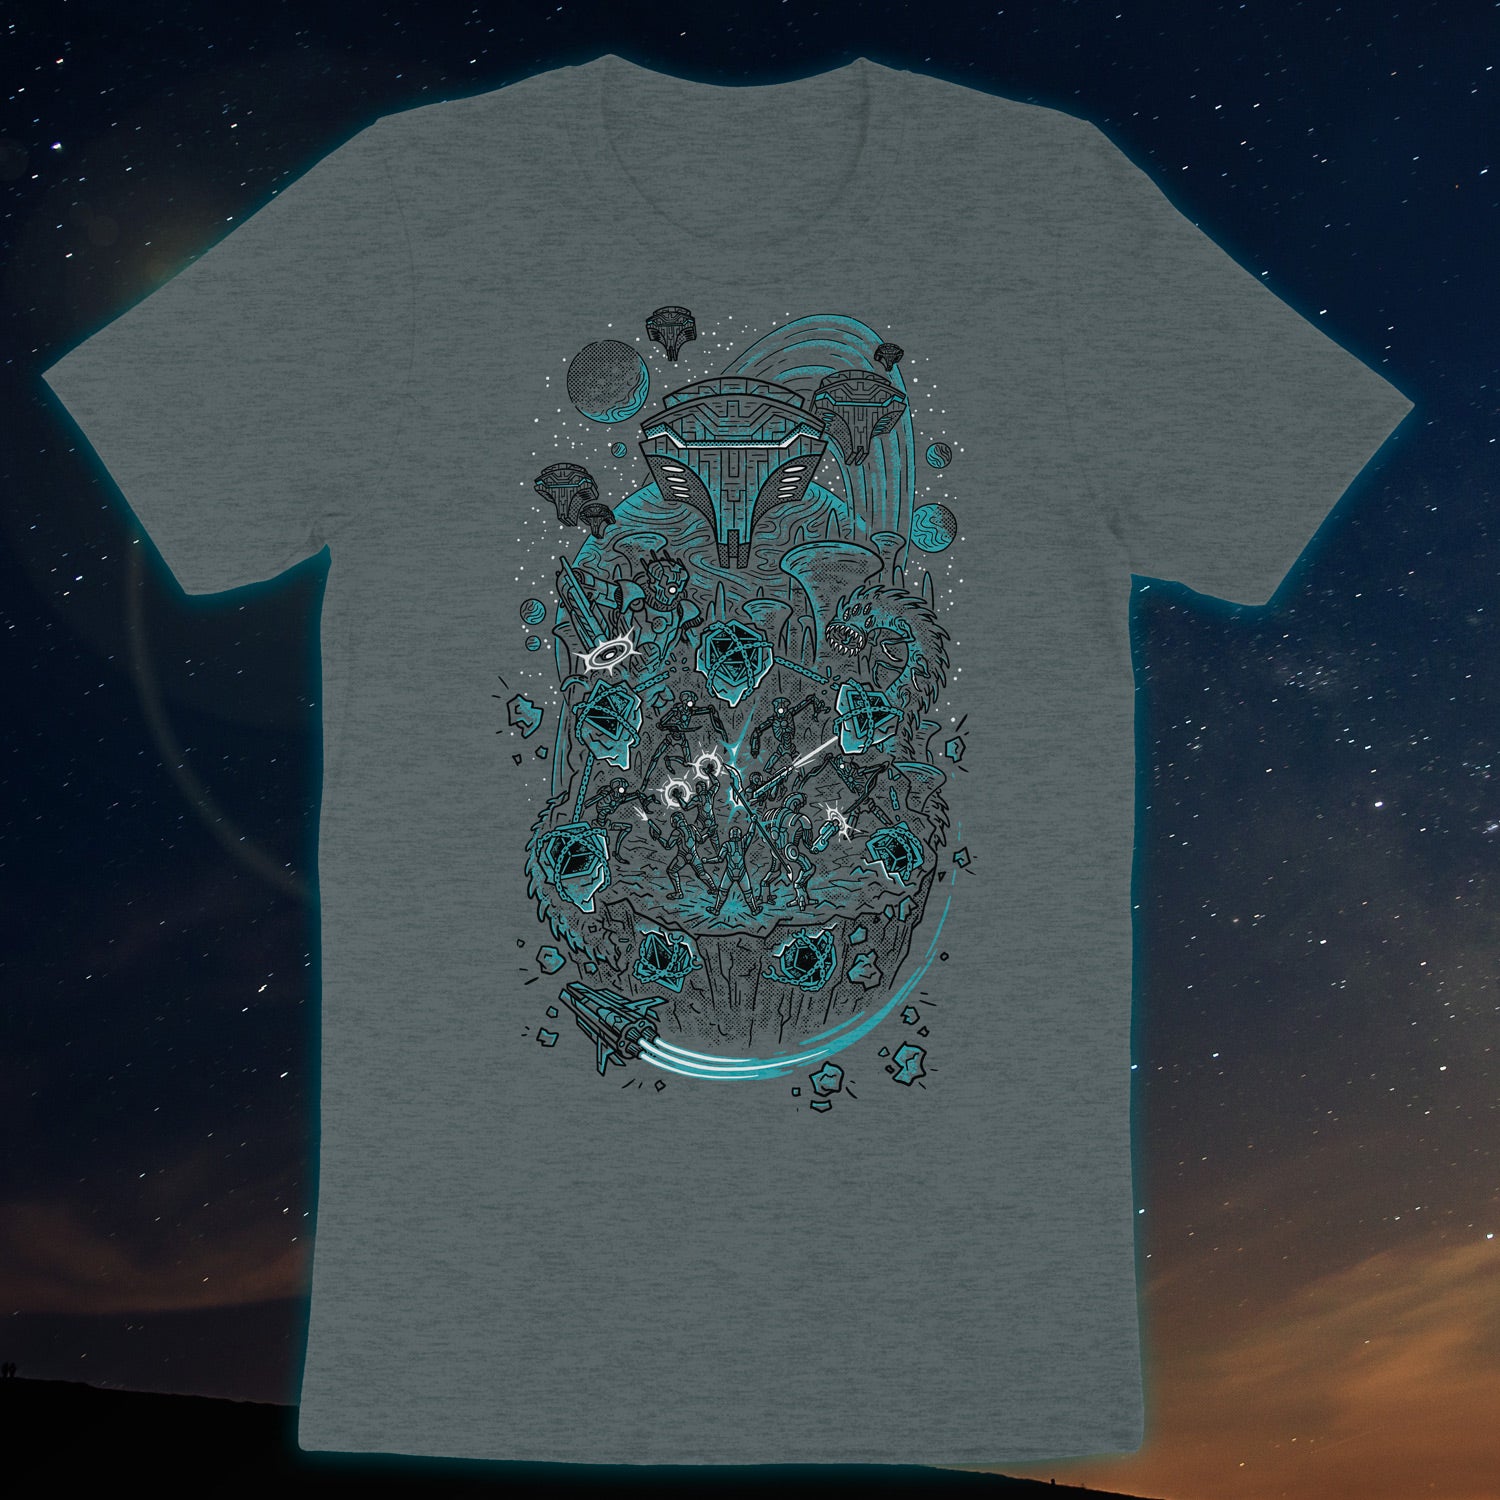 Deep heather t-shirt with space rpg/starfinder art